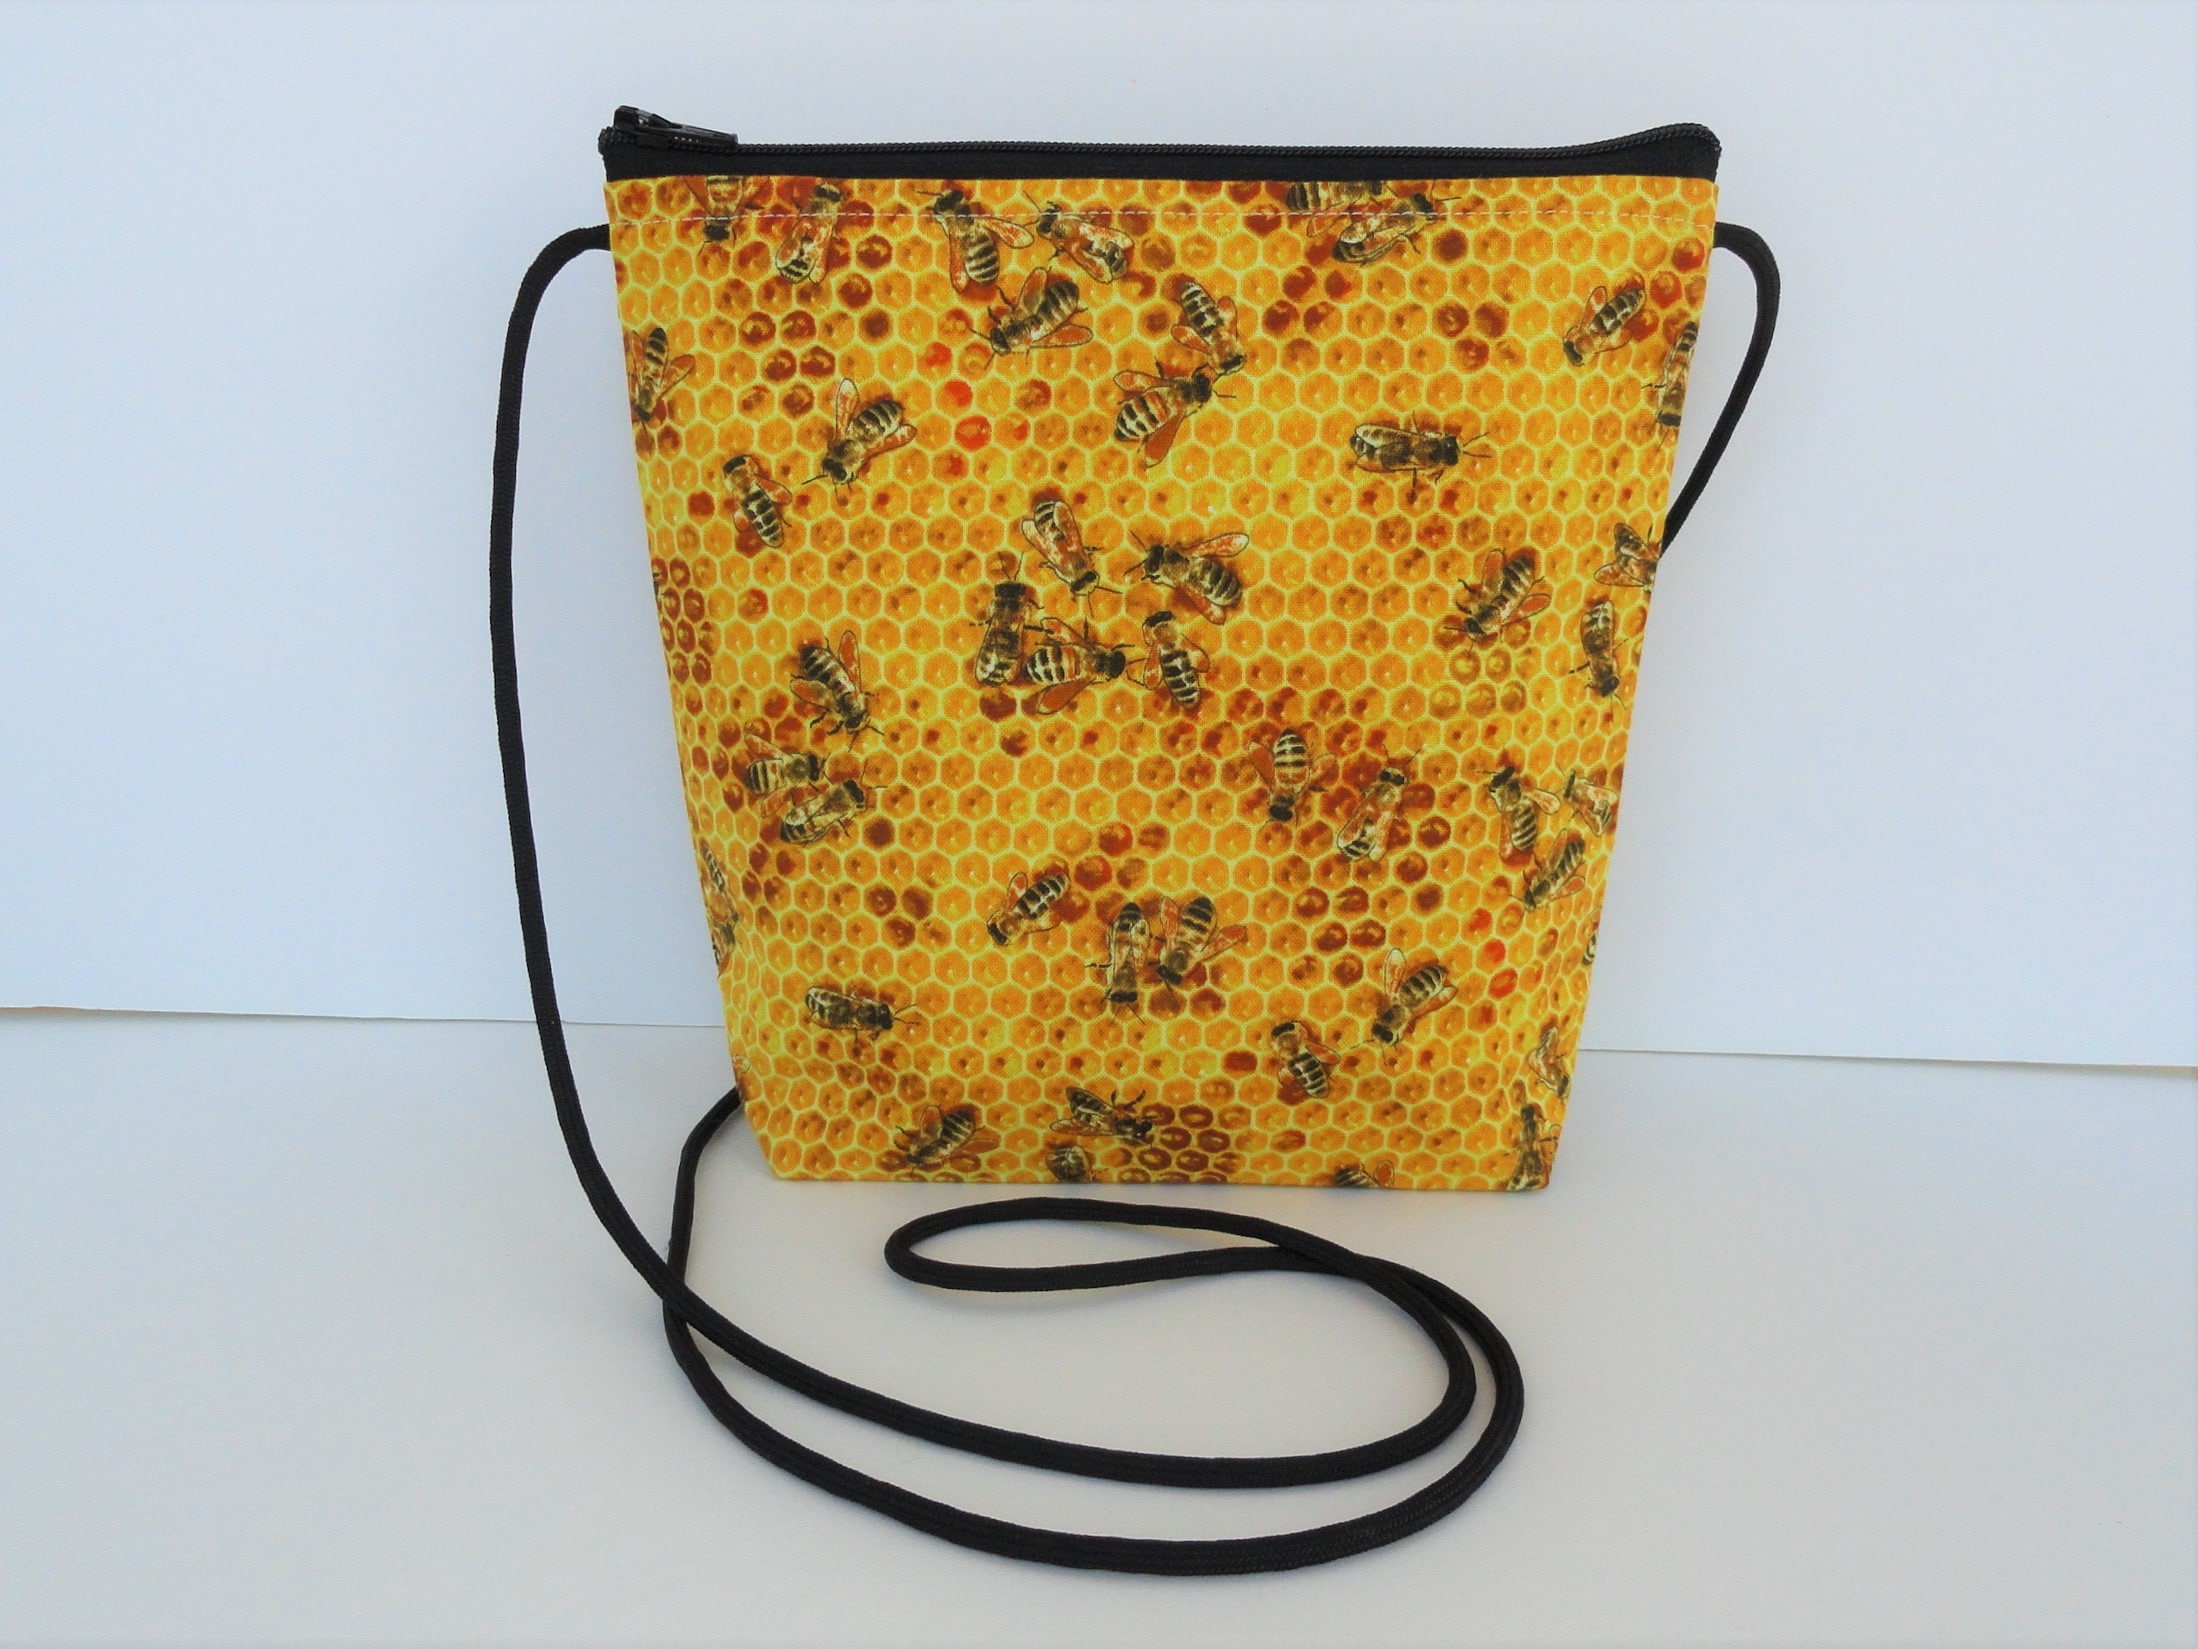 Honey Bee Shoulder Purse, Cute Bumble Yellow White Vegan Leather Top Handle Handbag Print Small Bag Women Ladies Designer